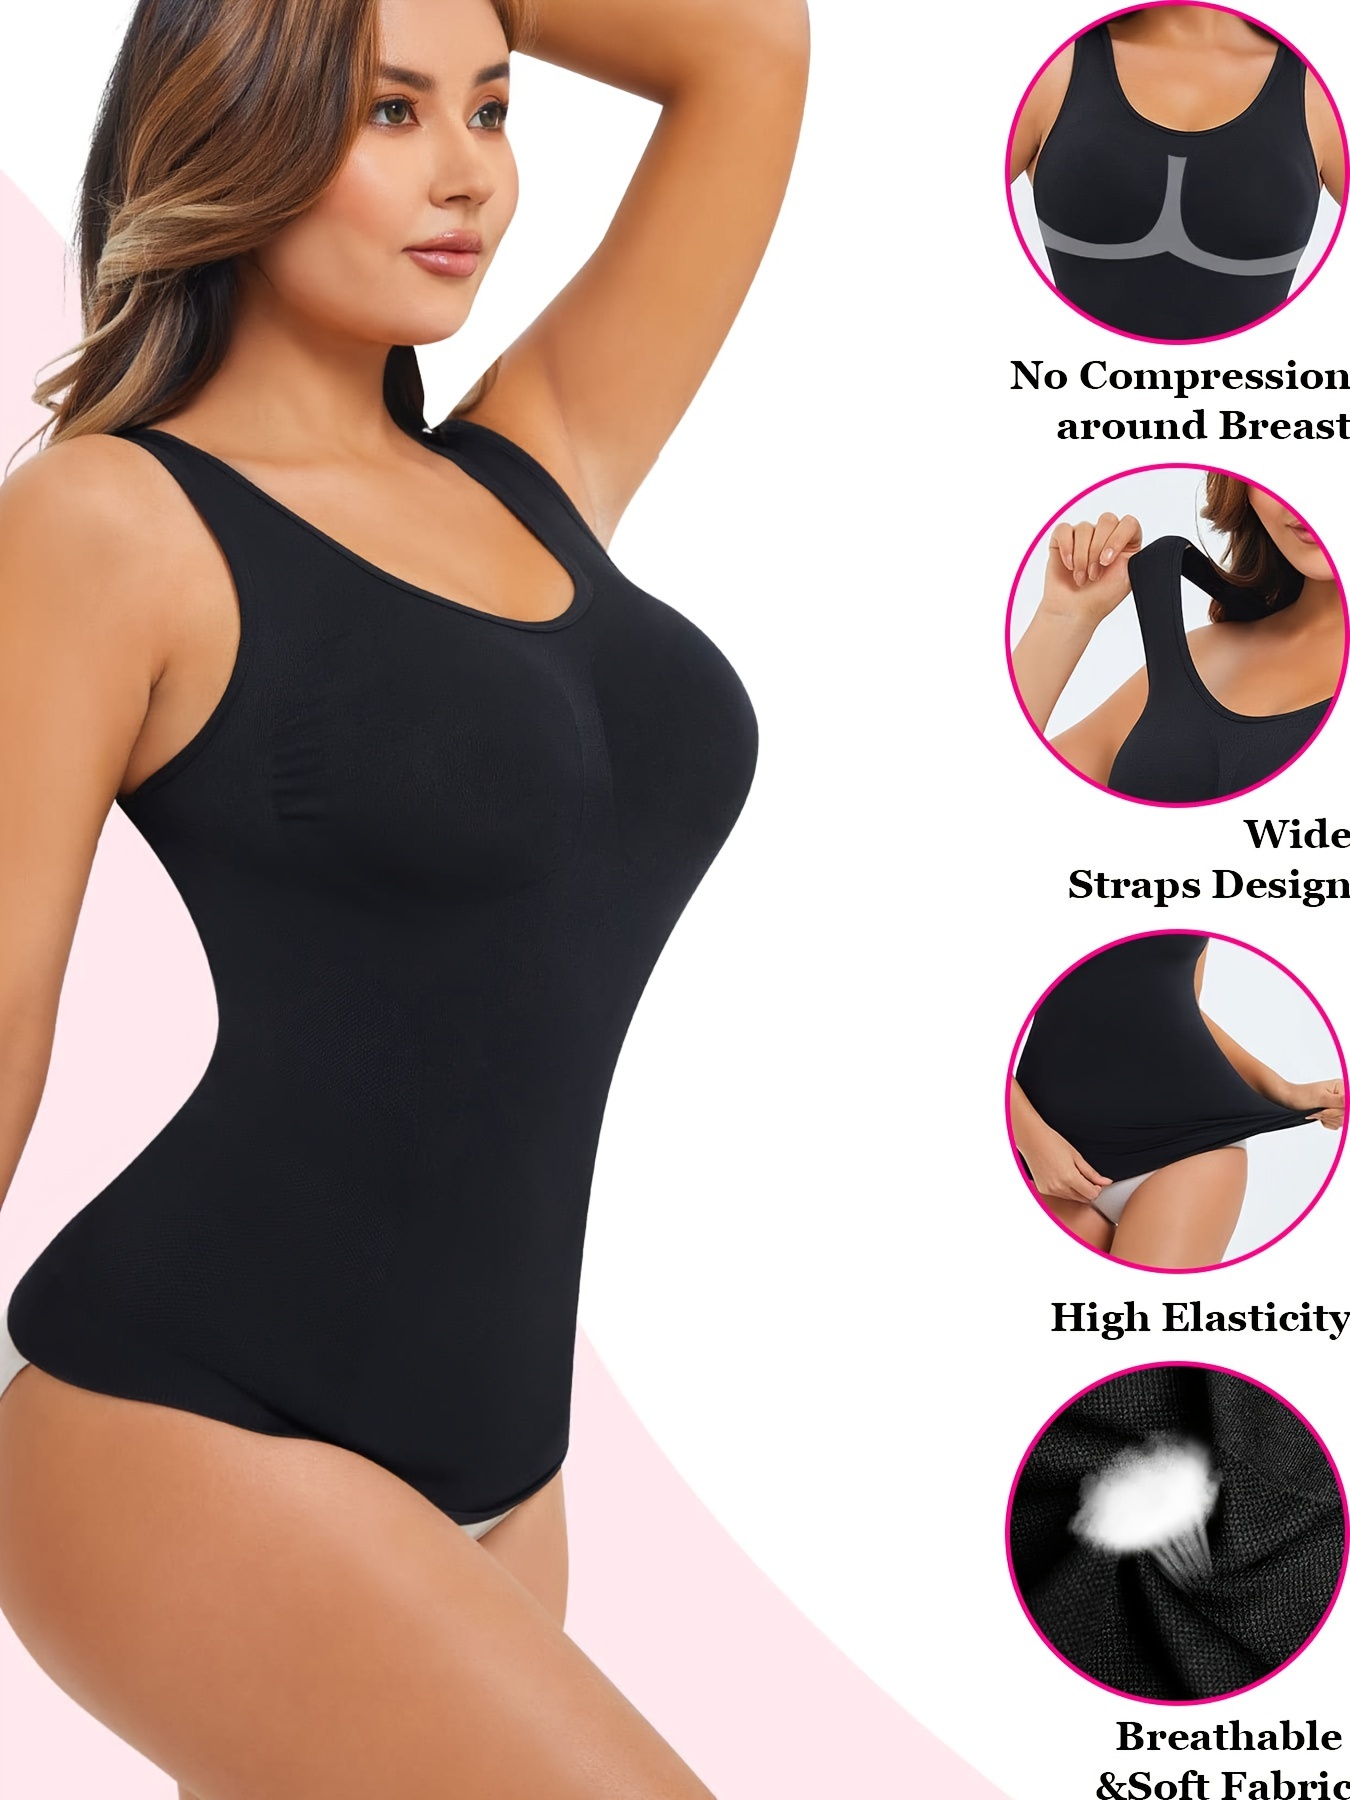 Seamless Solid Shaping Tops, Tummy Control Slimmer Sleeveless Top, Women's  Underwear & Shapewear